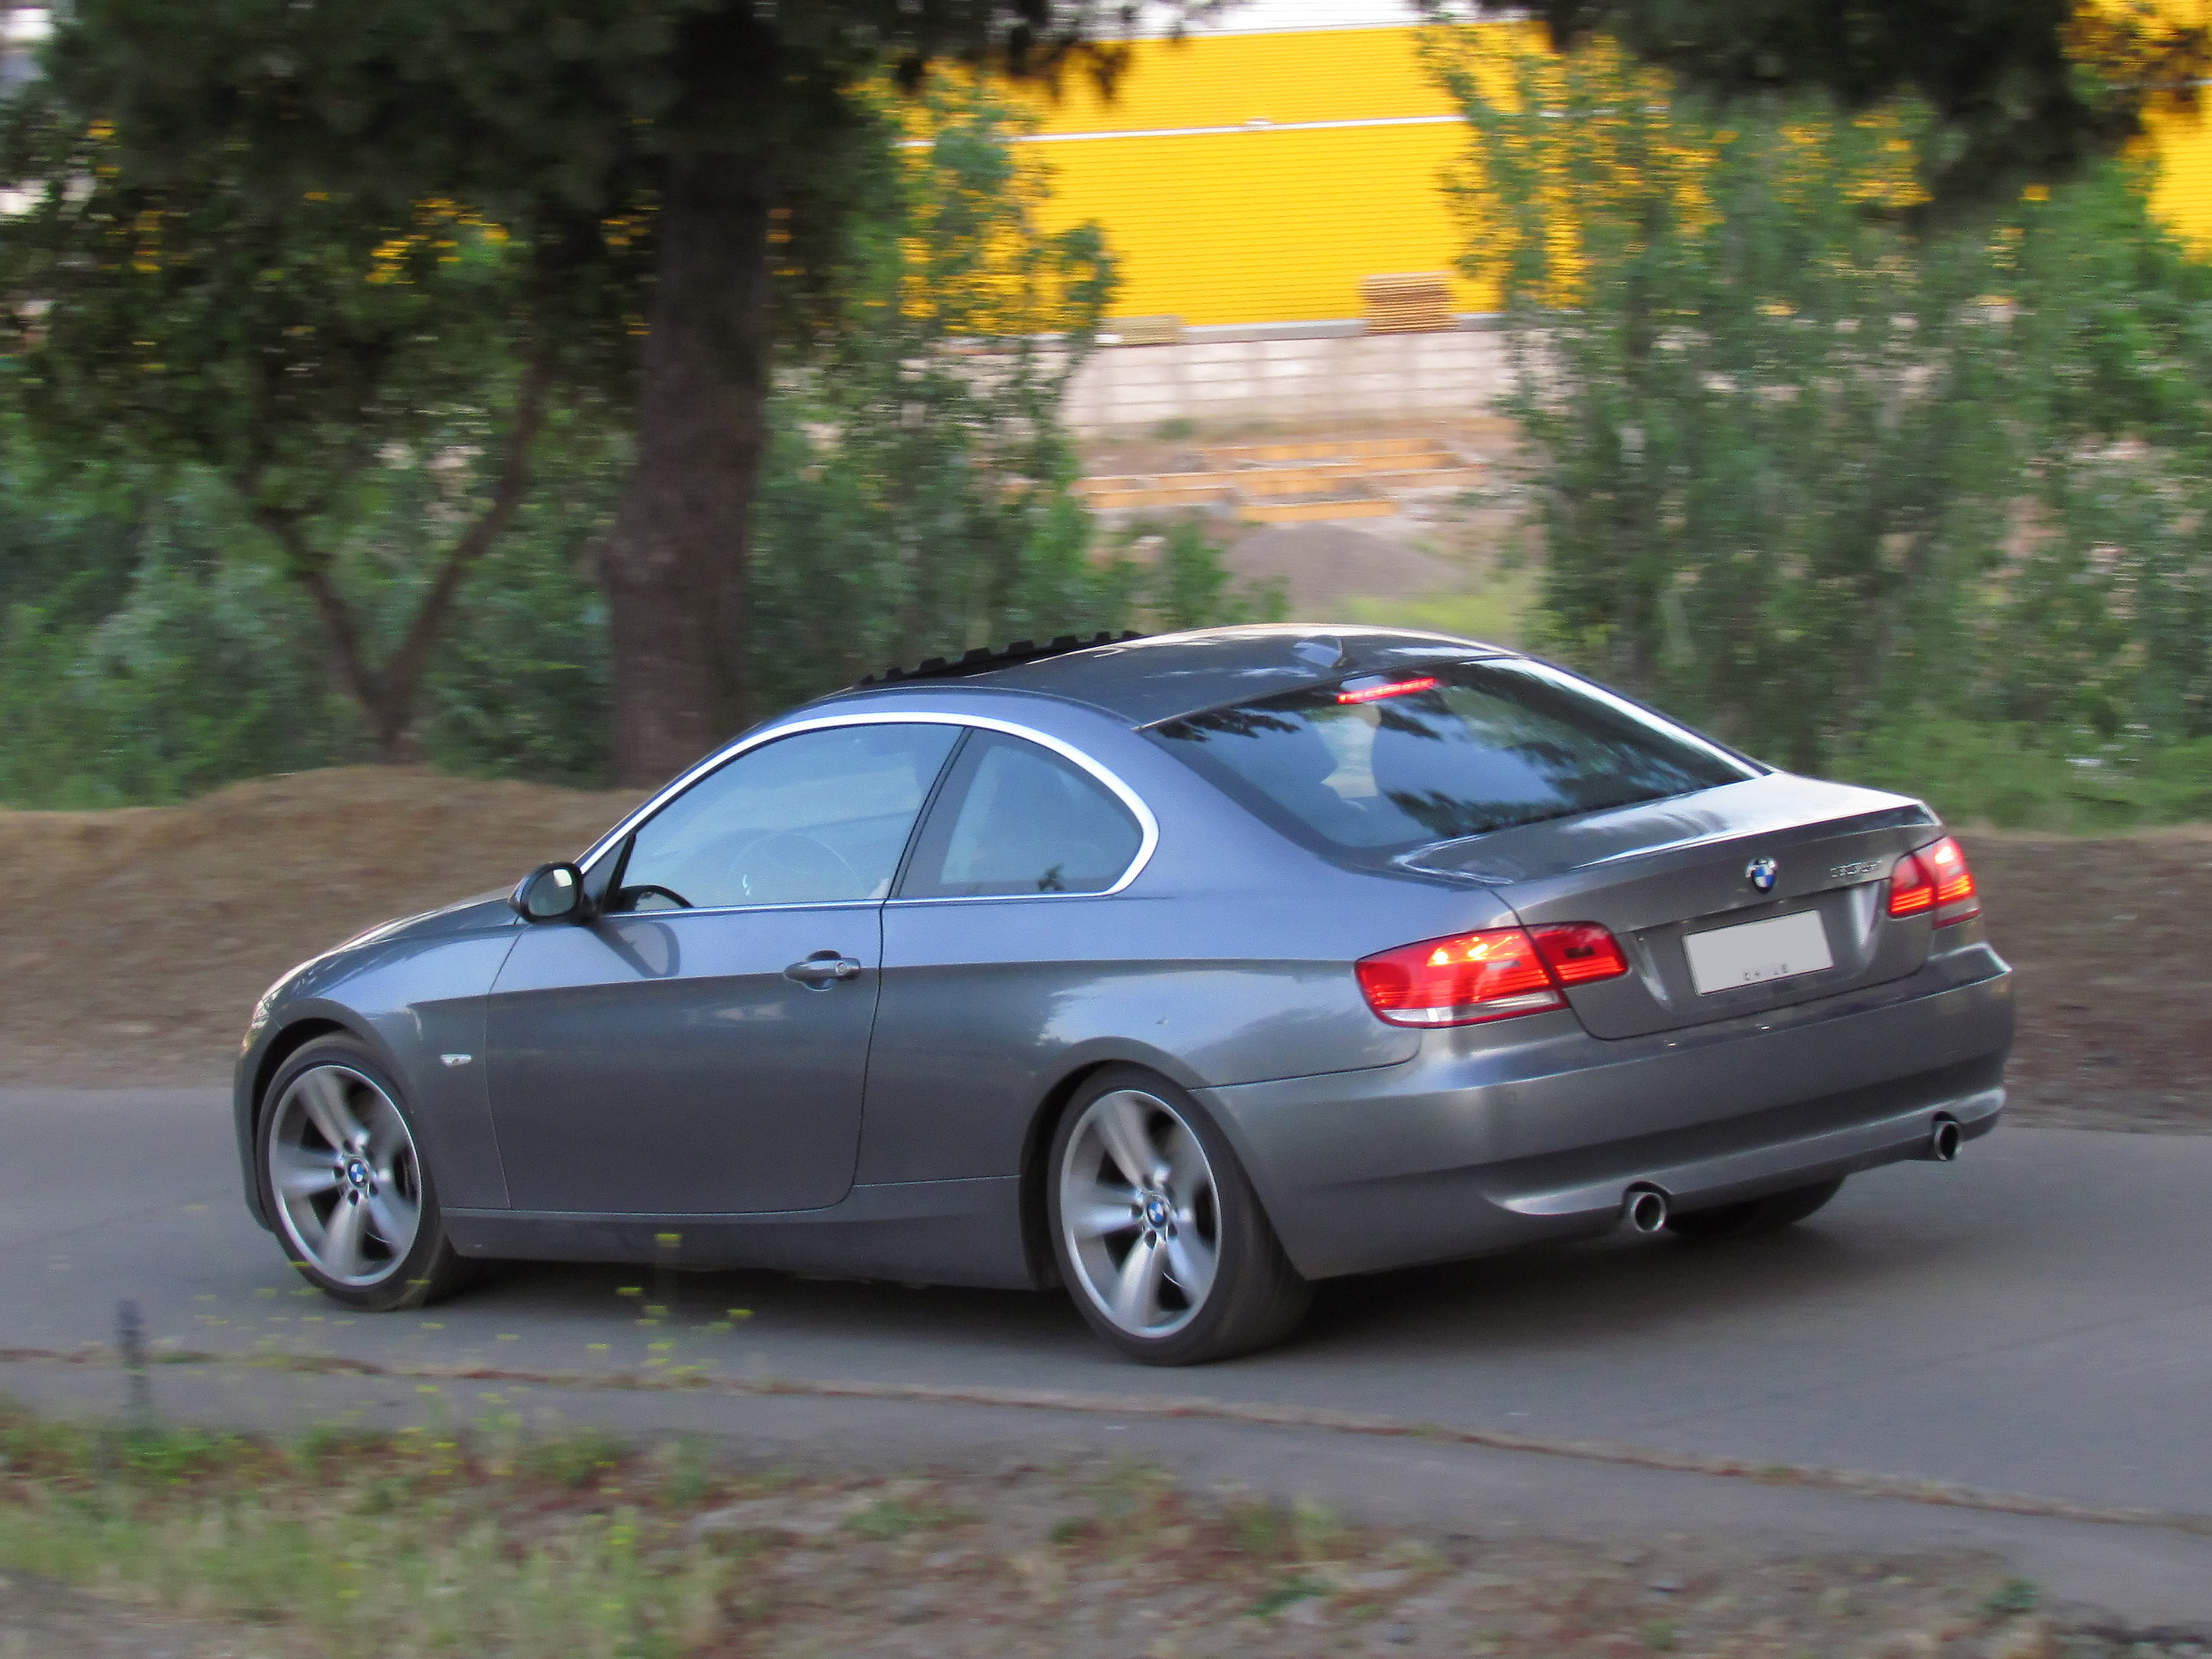 File:BMW 335i Coupe 3.0 2009 (11808940903).jpg - Wikimedia Commons